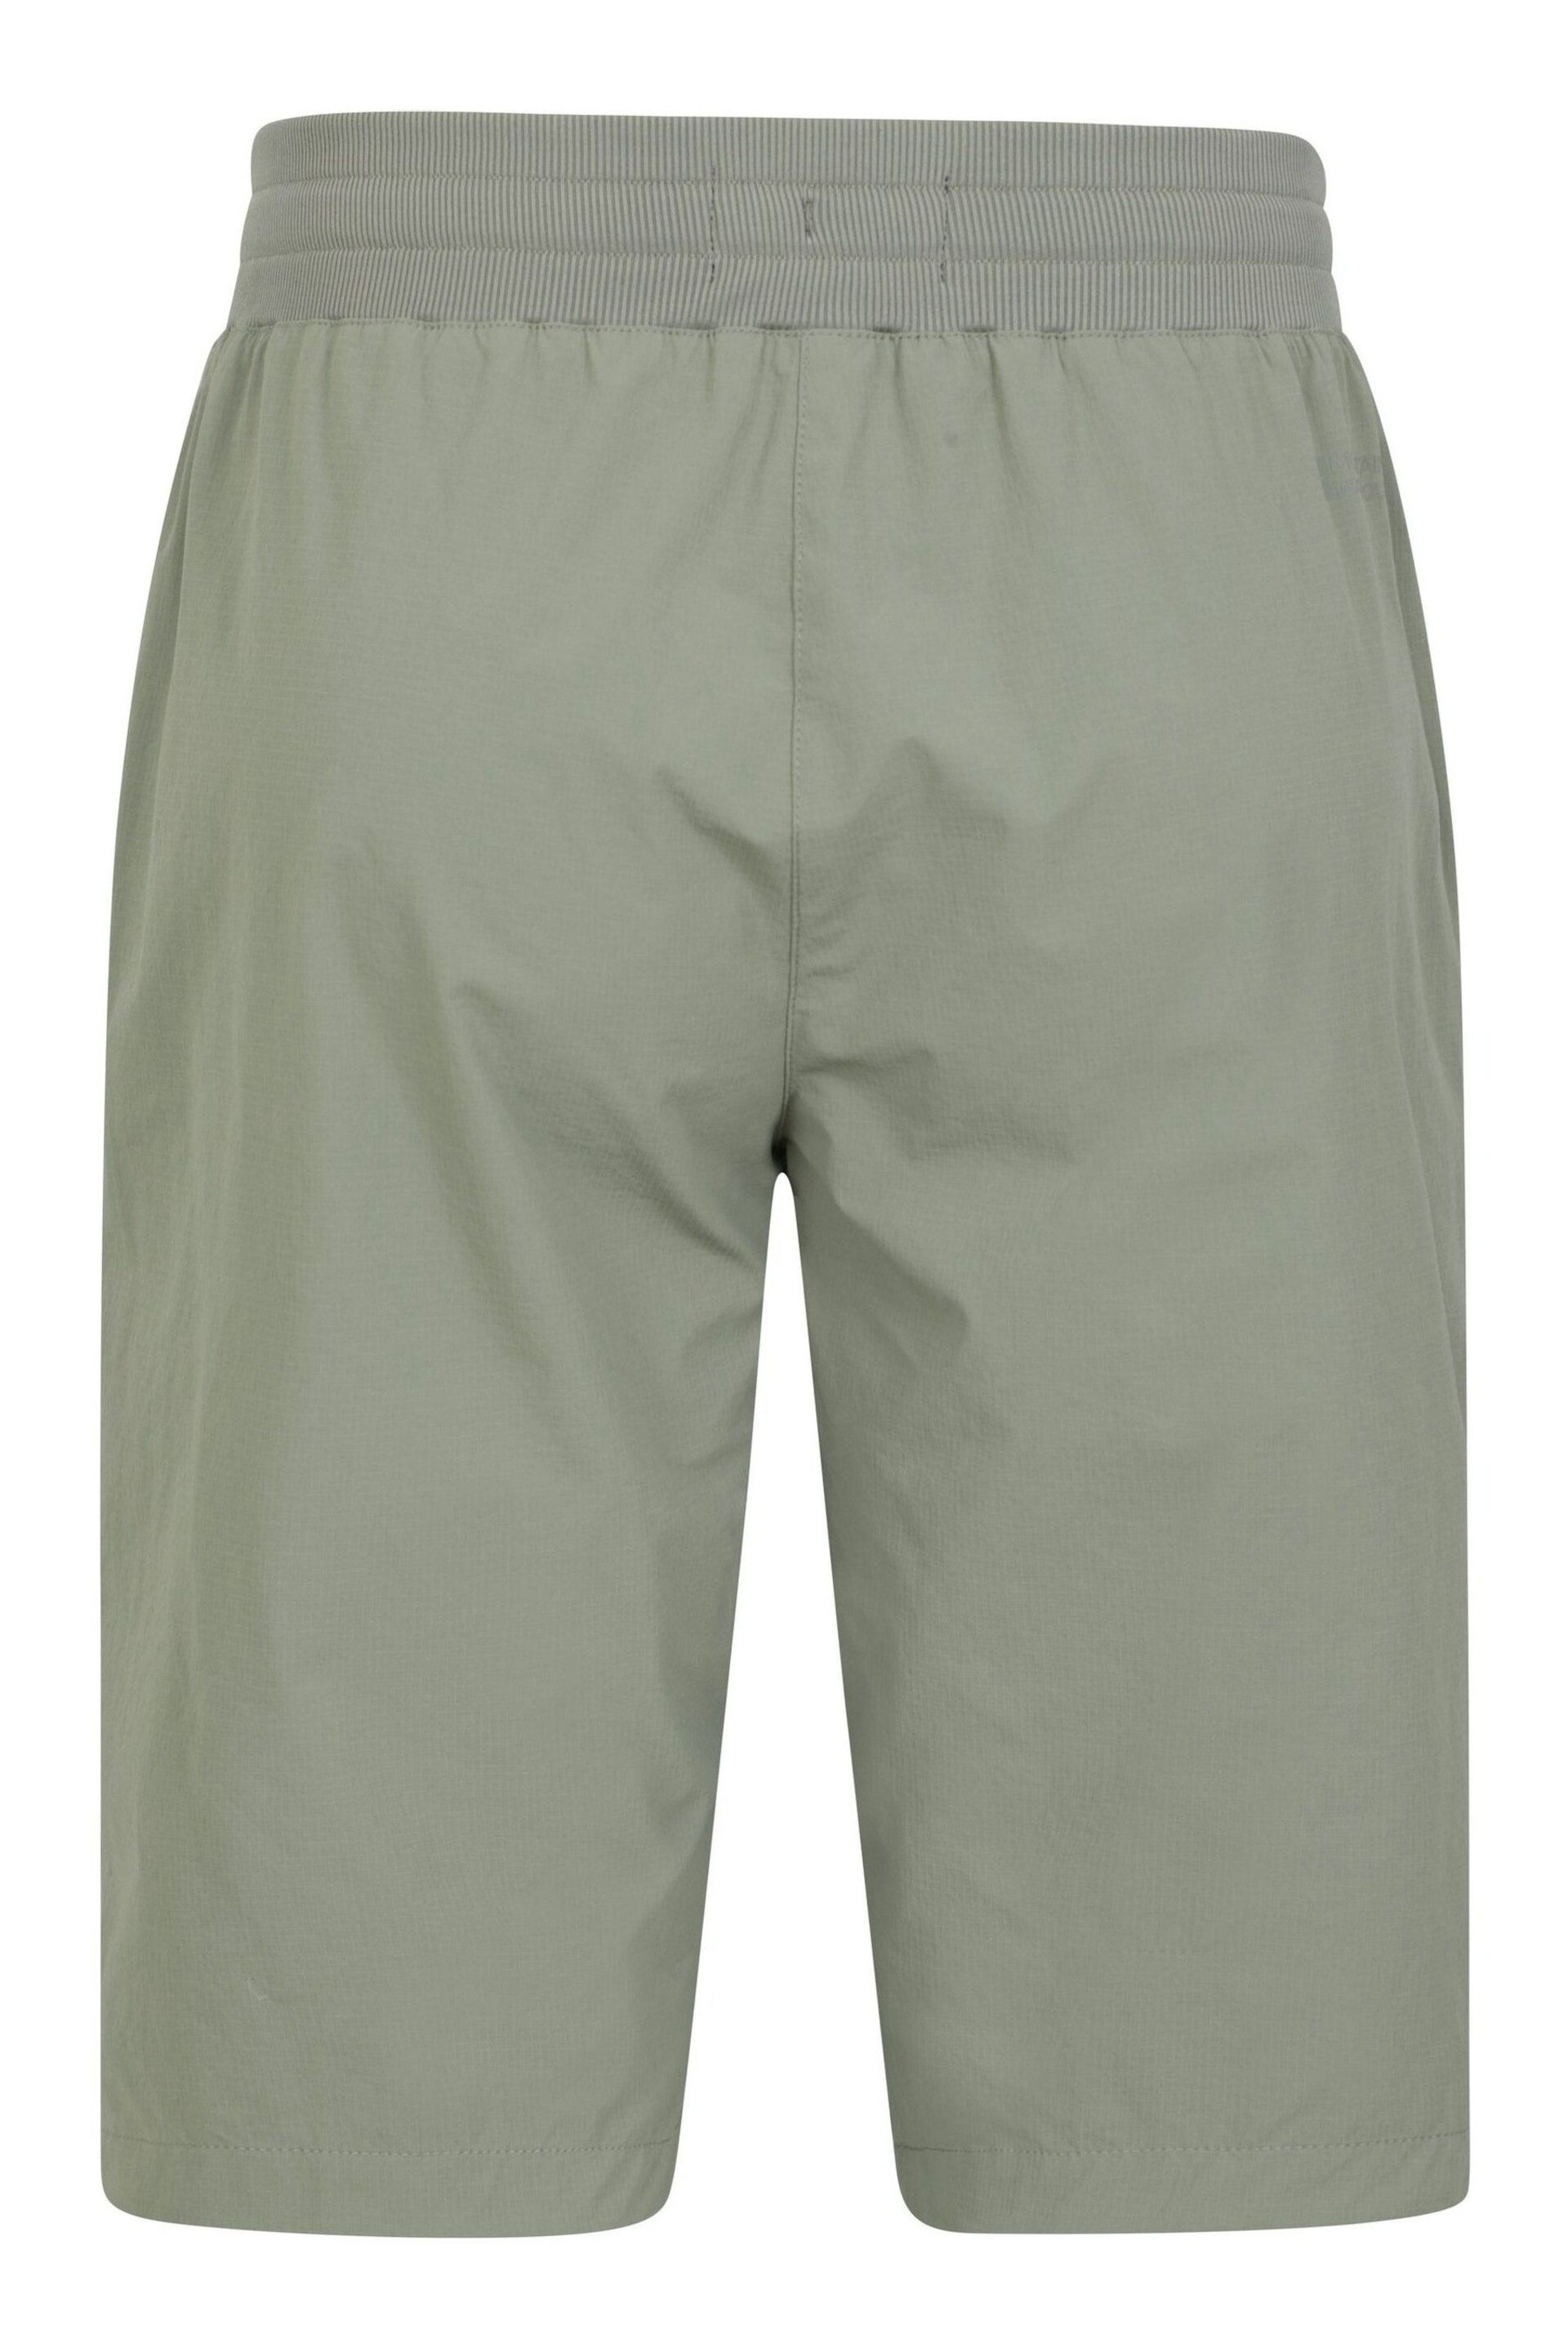 Mountain Warehouse Green Womens Explorer Long Shorts - Image 2 of 5